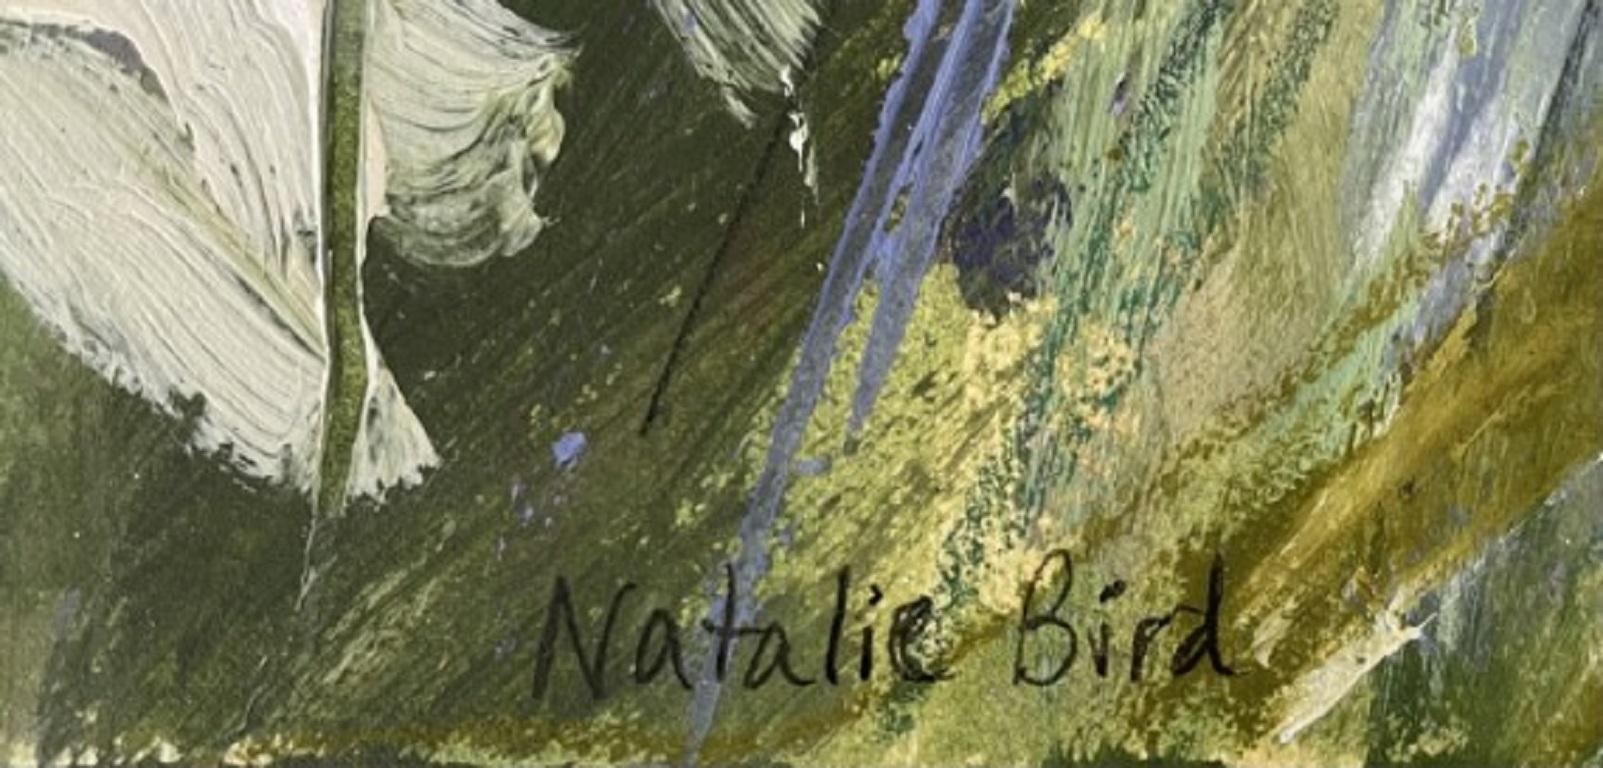 Natalie Bird, Summer evening in the garden with irises, Original floral painting 1